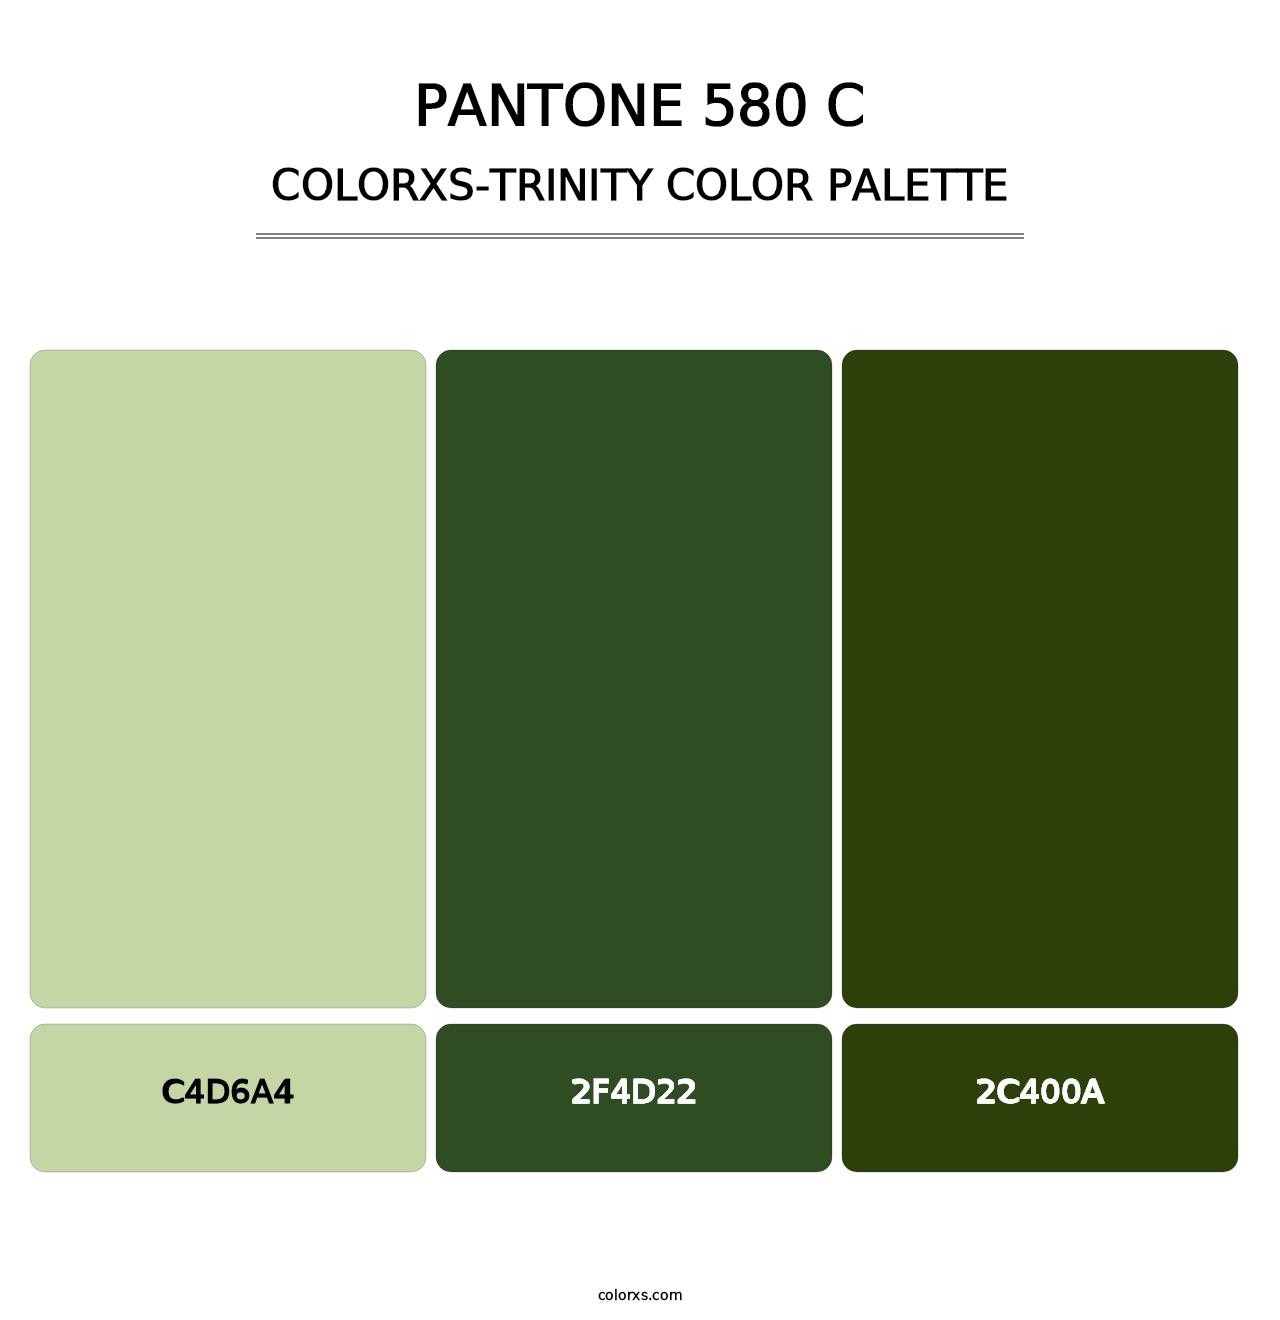 PANTONE 580 C - Colorxs Trinity Palette